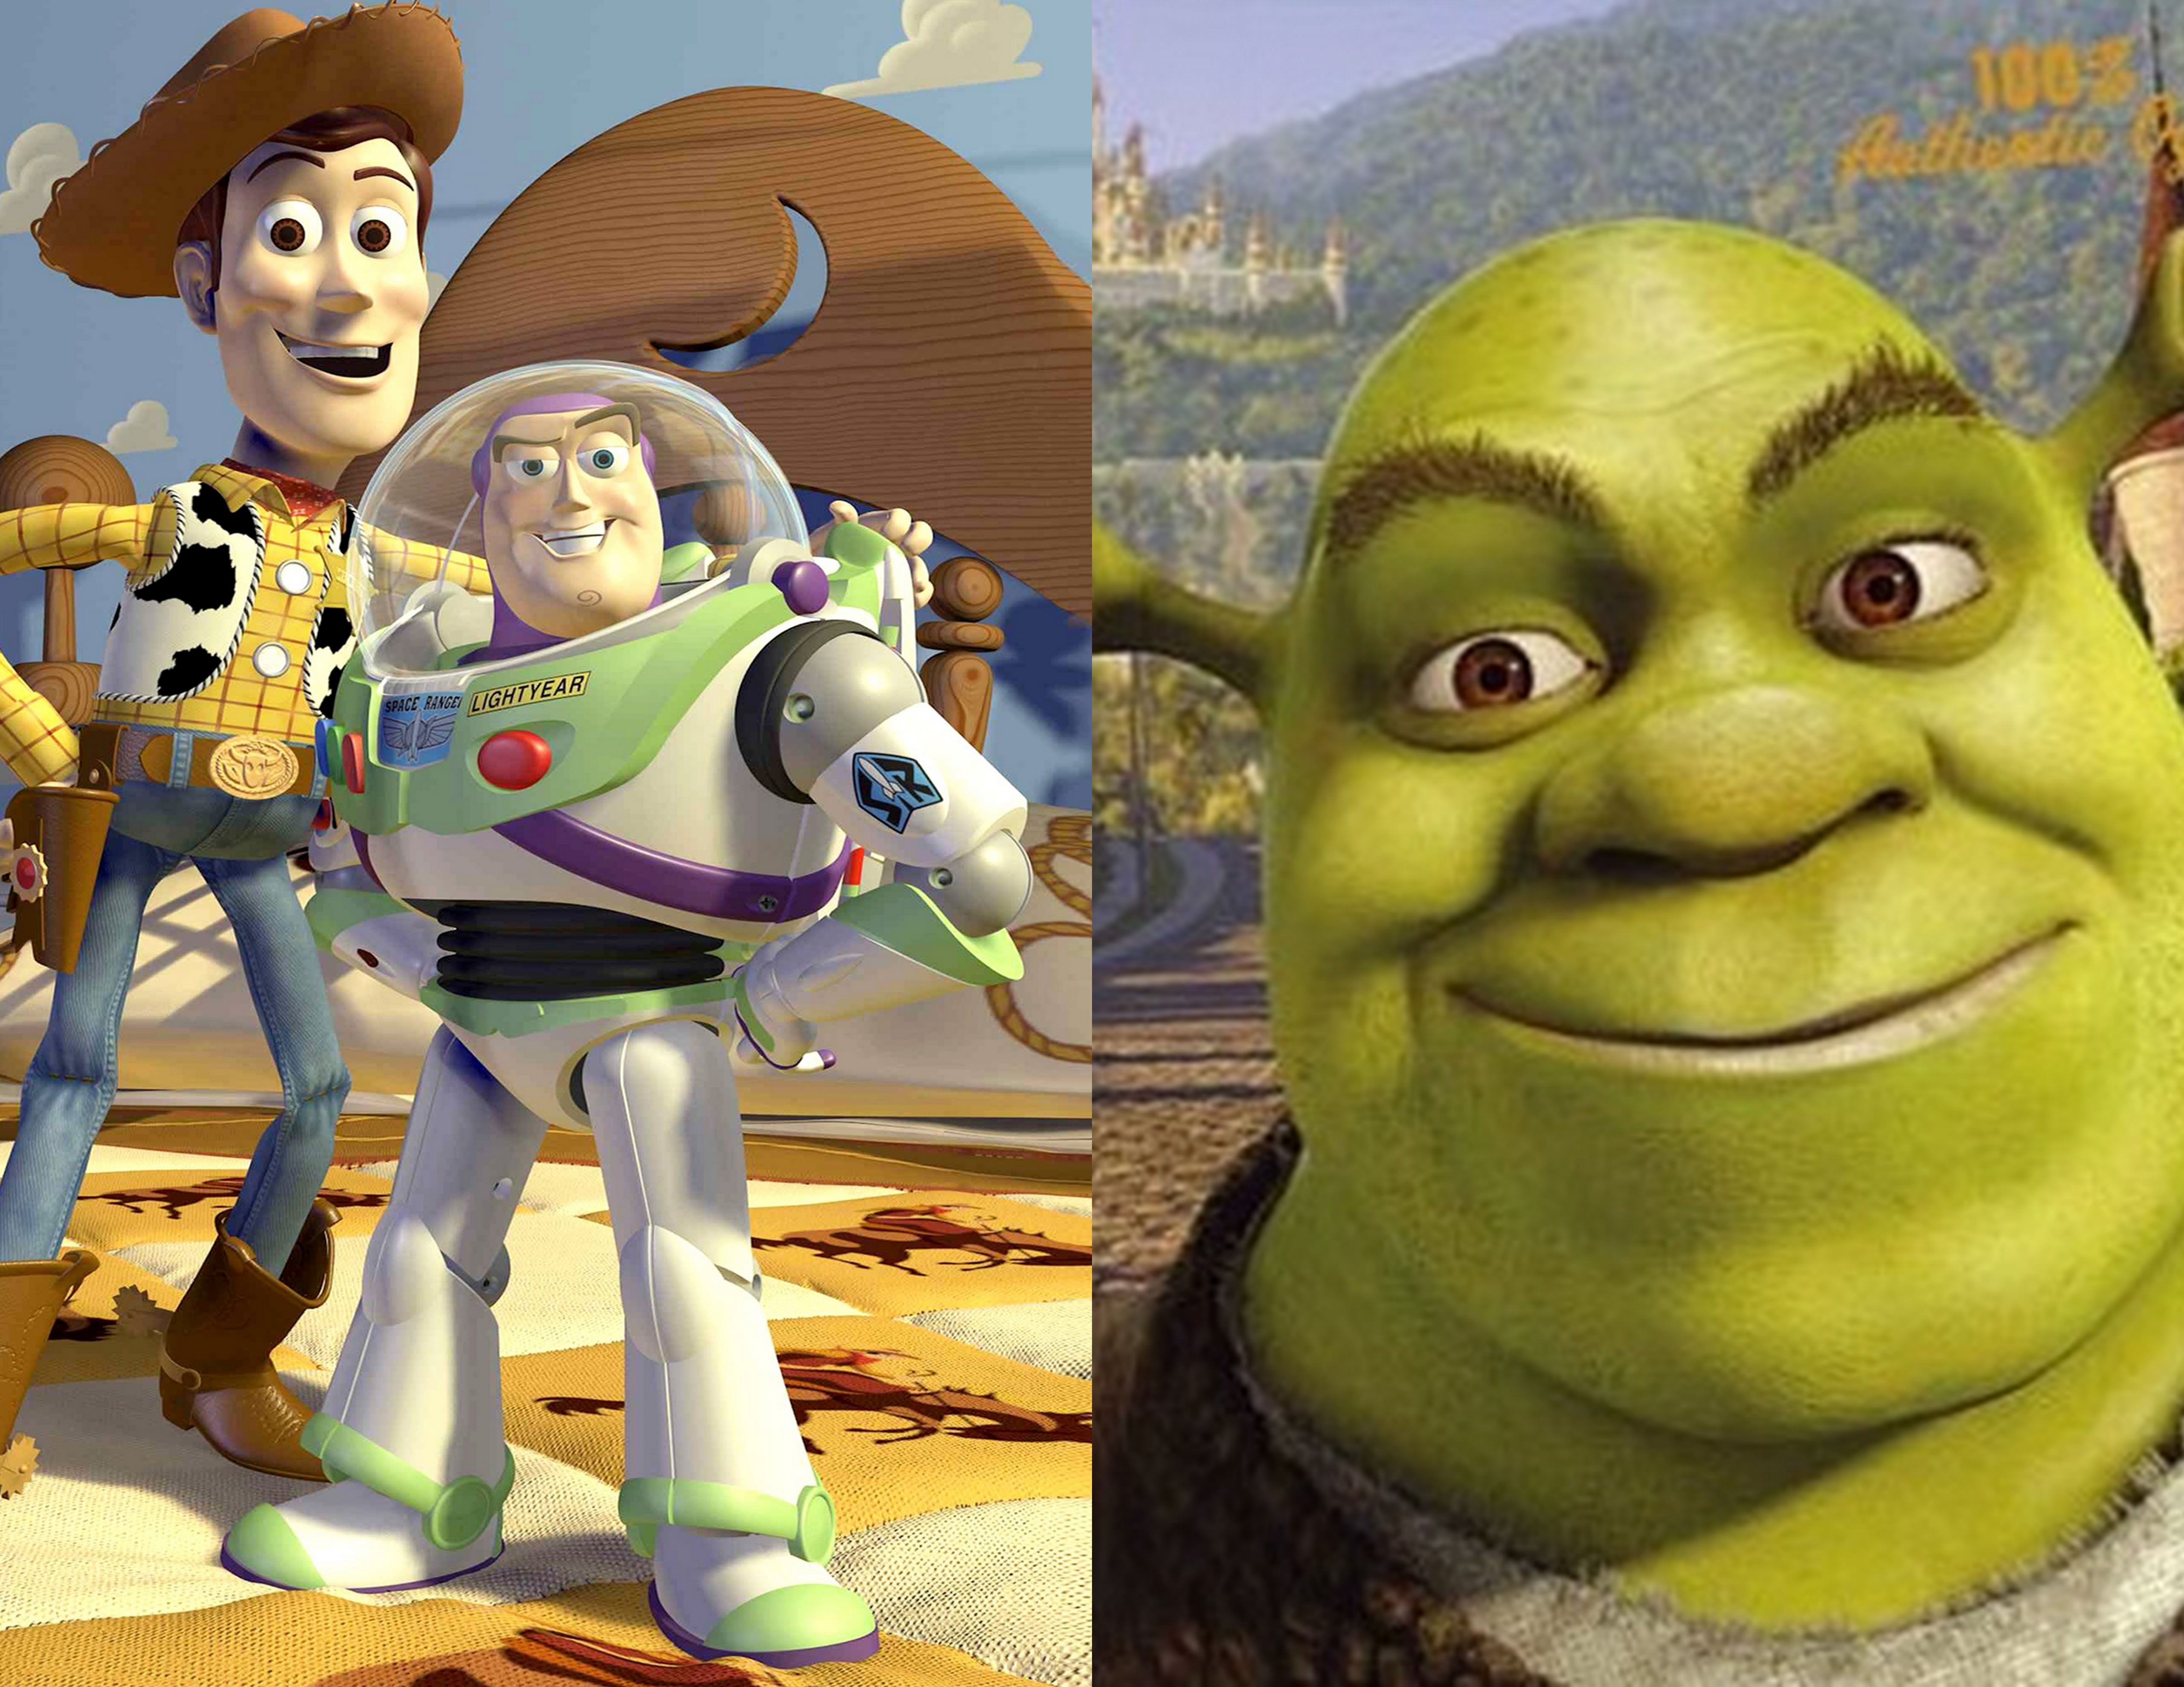 Pixar vs Dreamworks – Who Wins the Animation Battle?